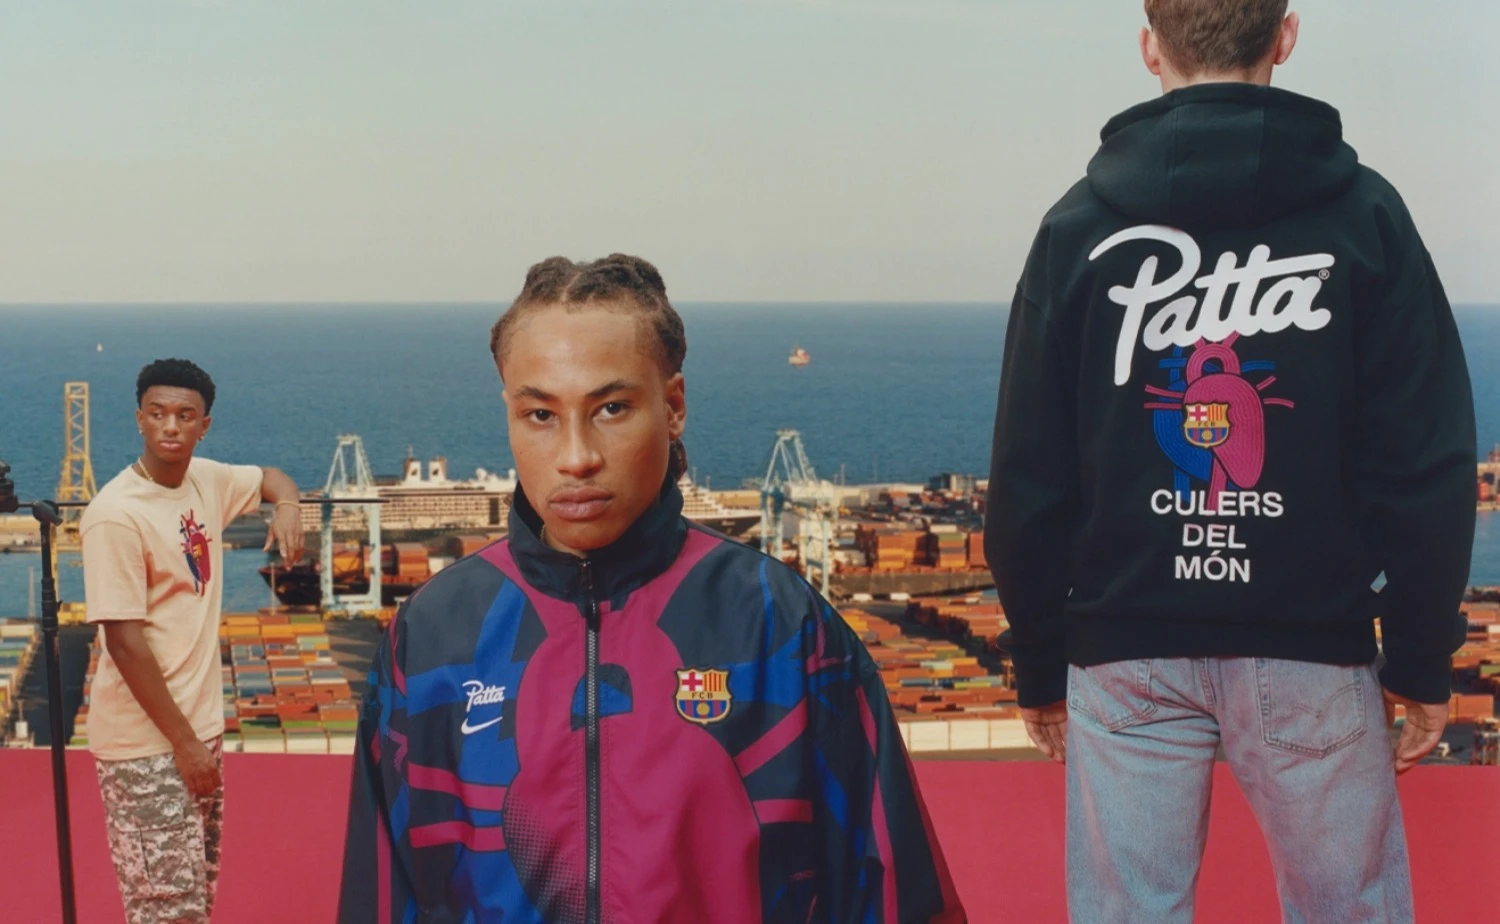 Patta, FC Barcelona en Nike komen met nieuwe limited edition ‘Culers del Món’-collectie